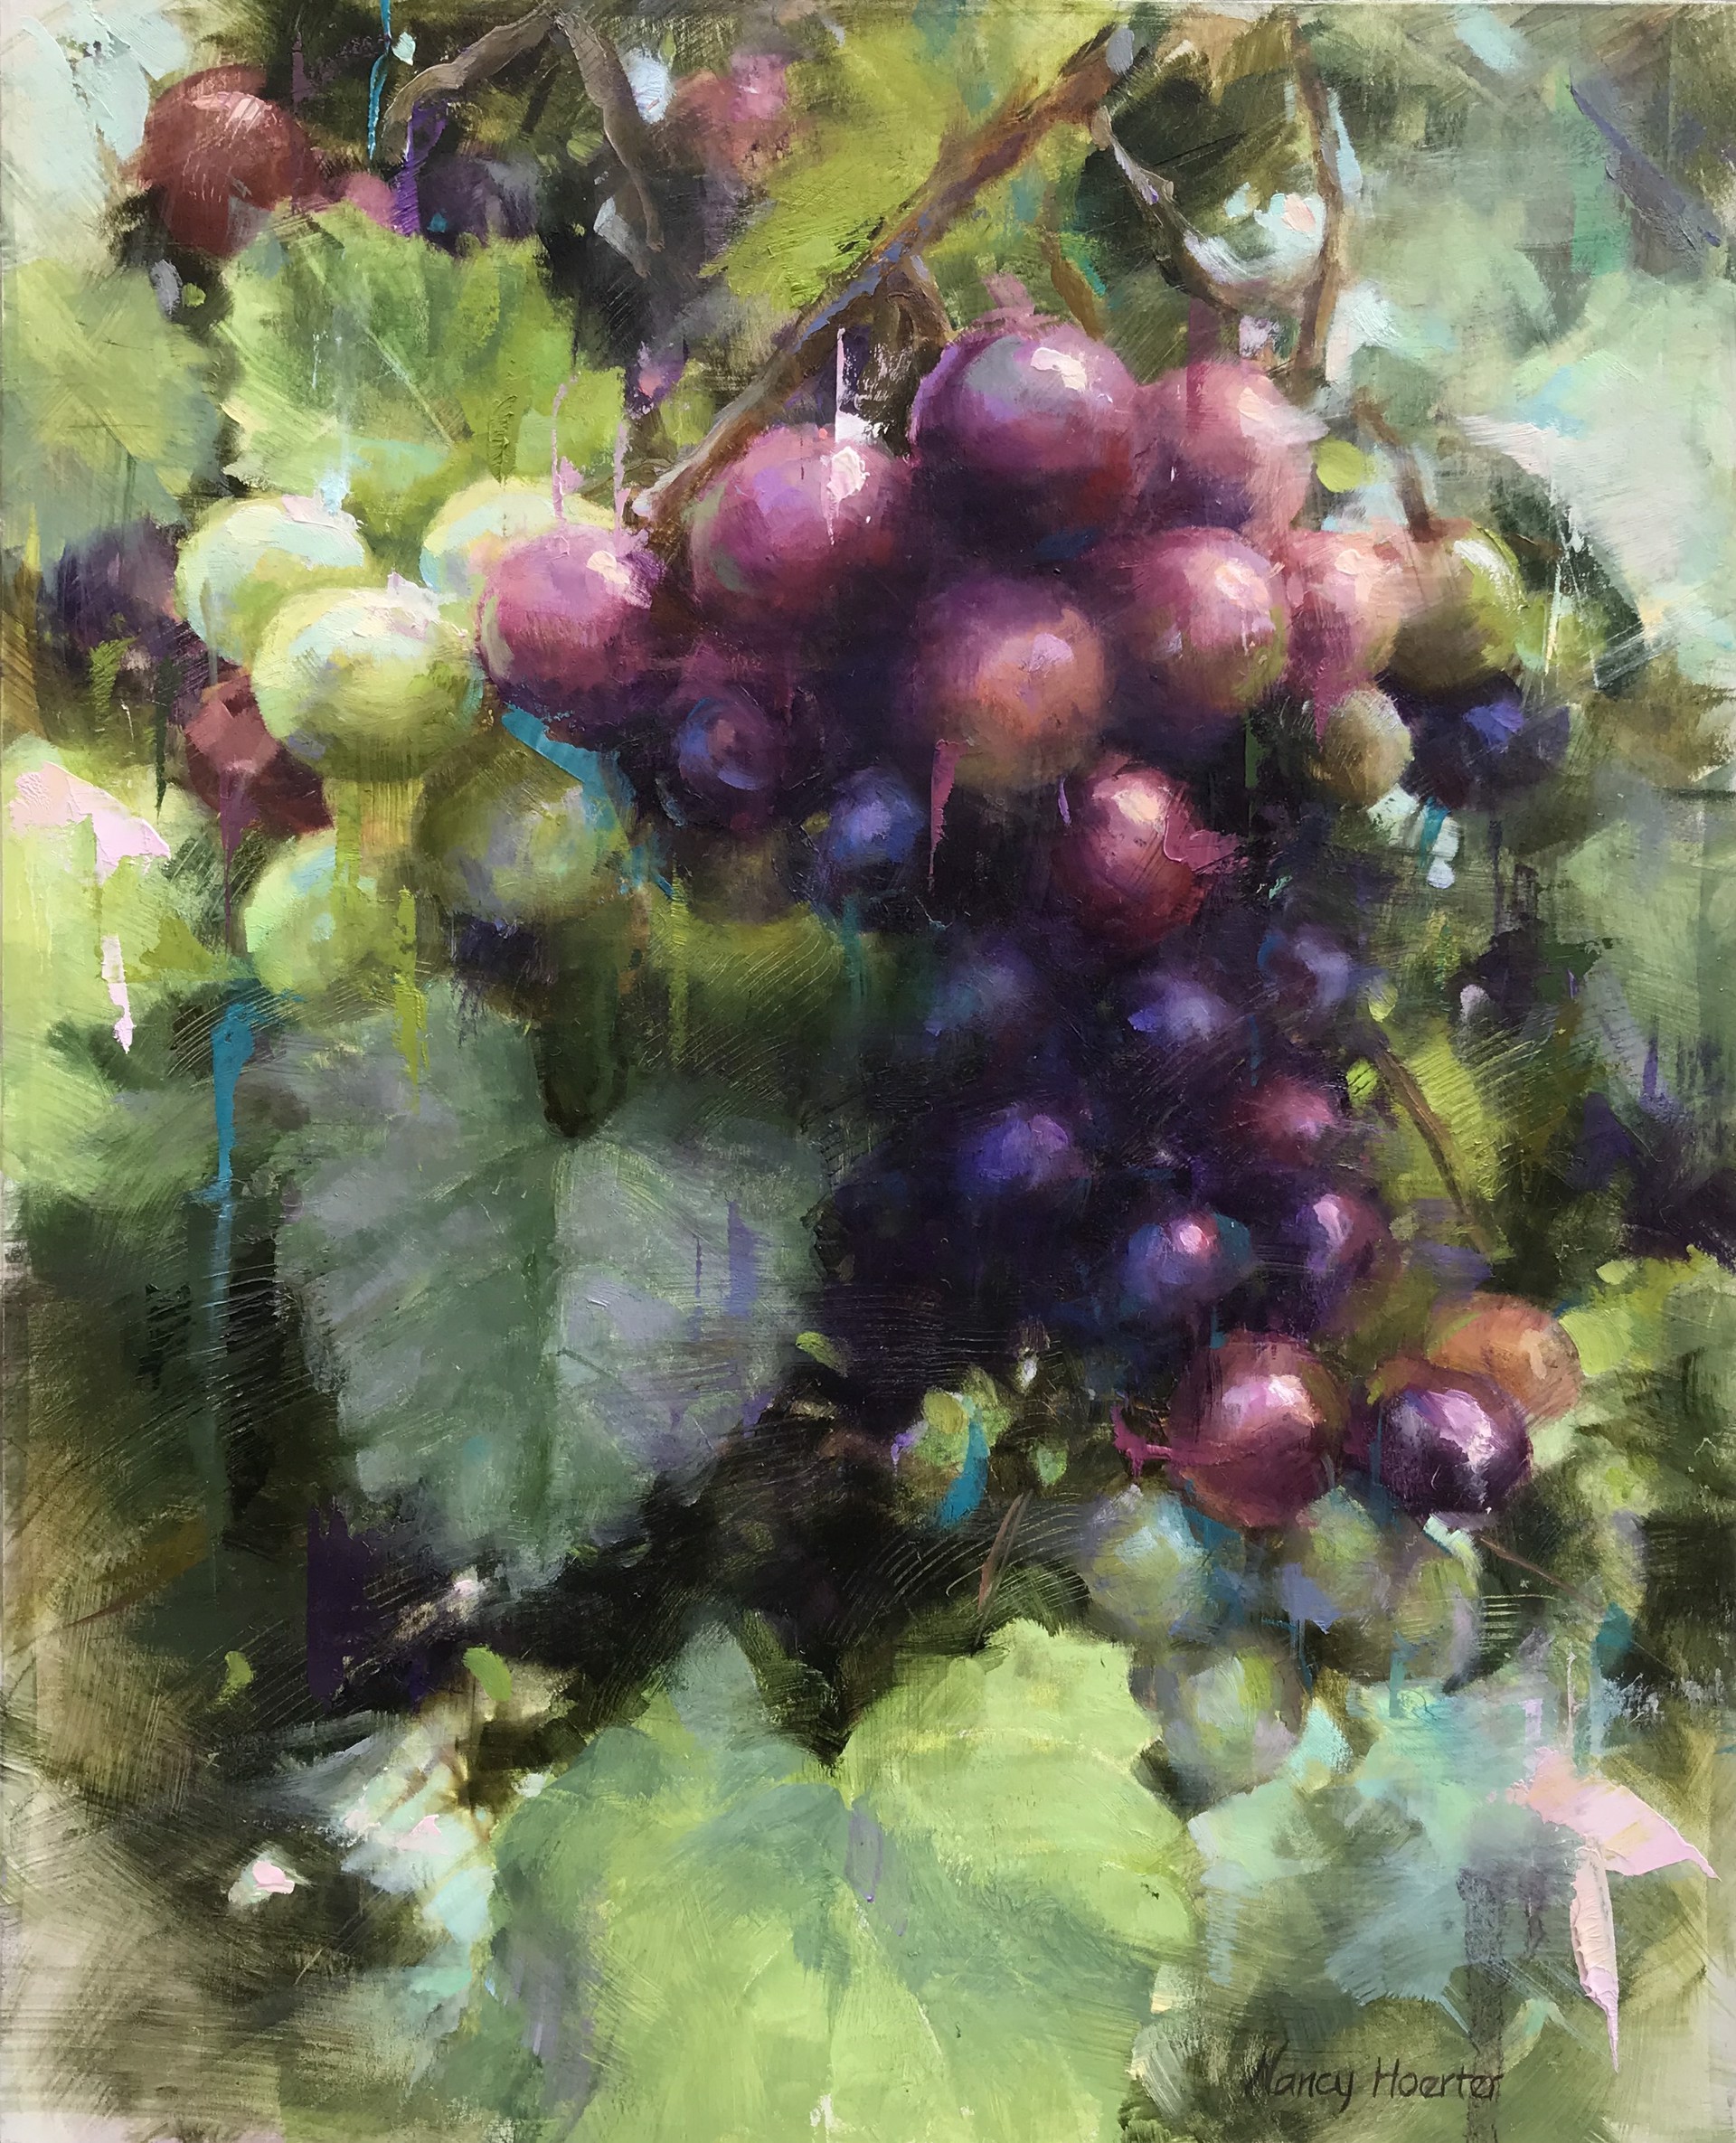 On the Vine by Nancy Hoerter